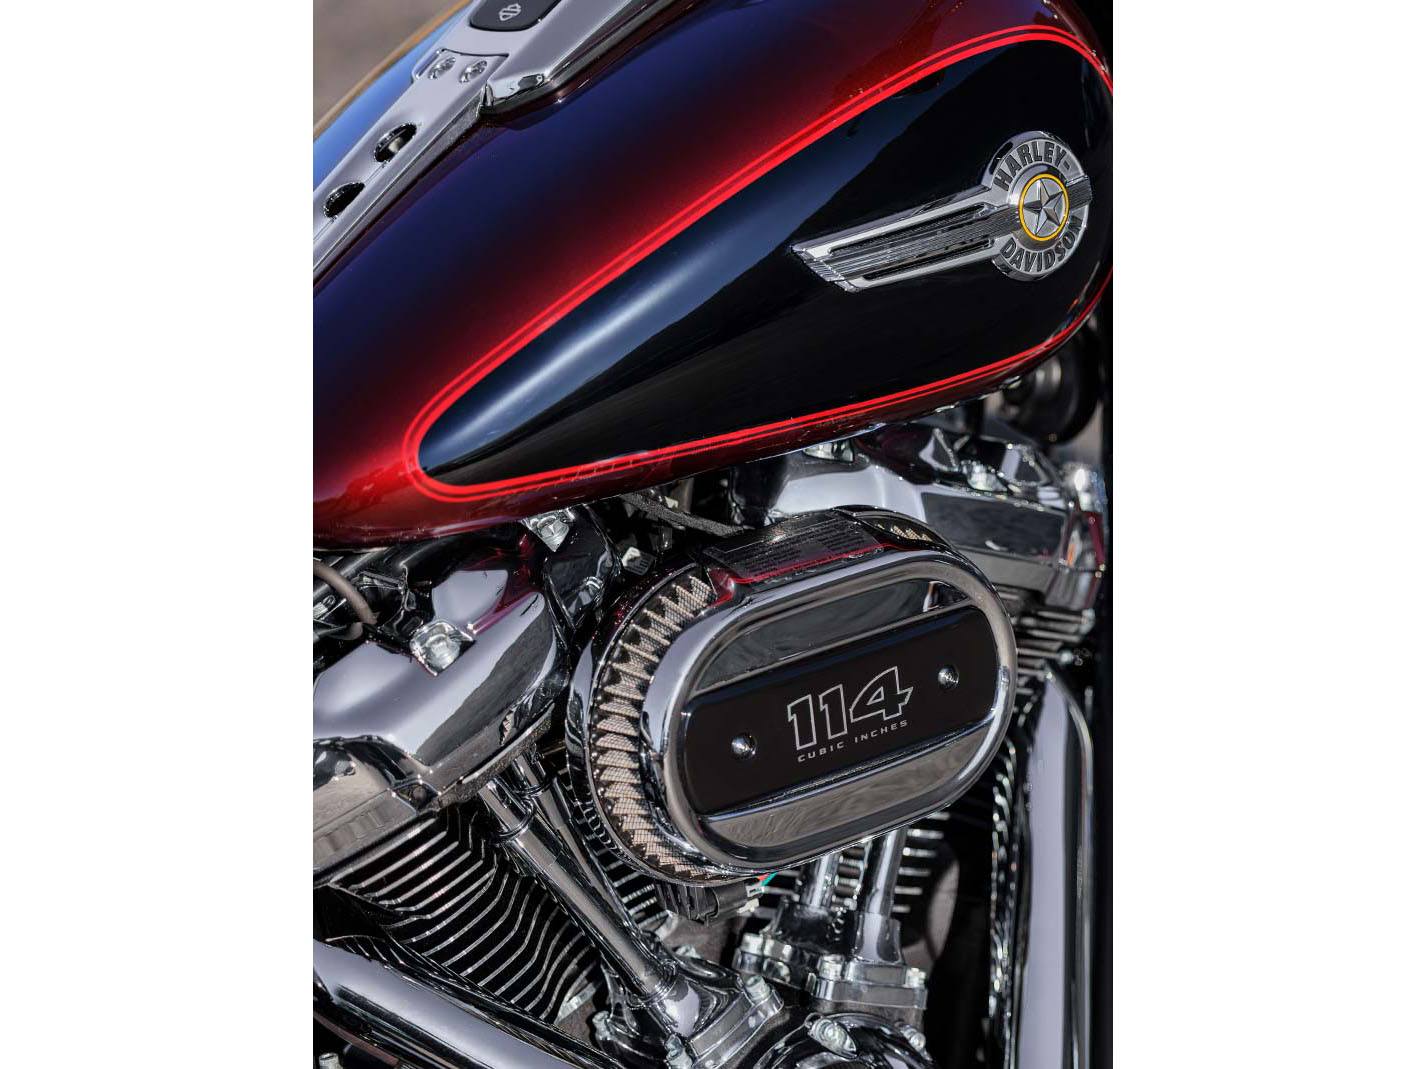 2022 Harley-Davidson Fat Boy® 114 in Jacksonville, North Carolina - Photo 3